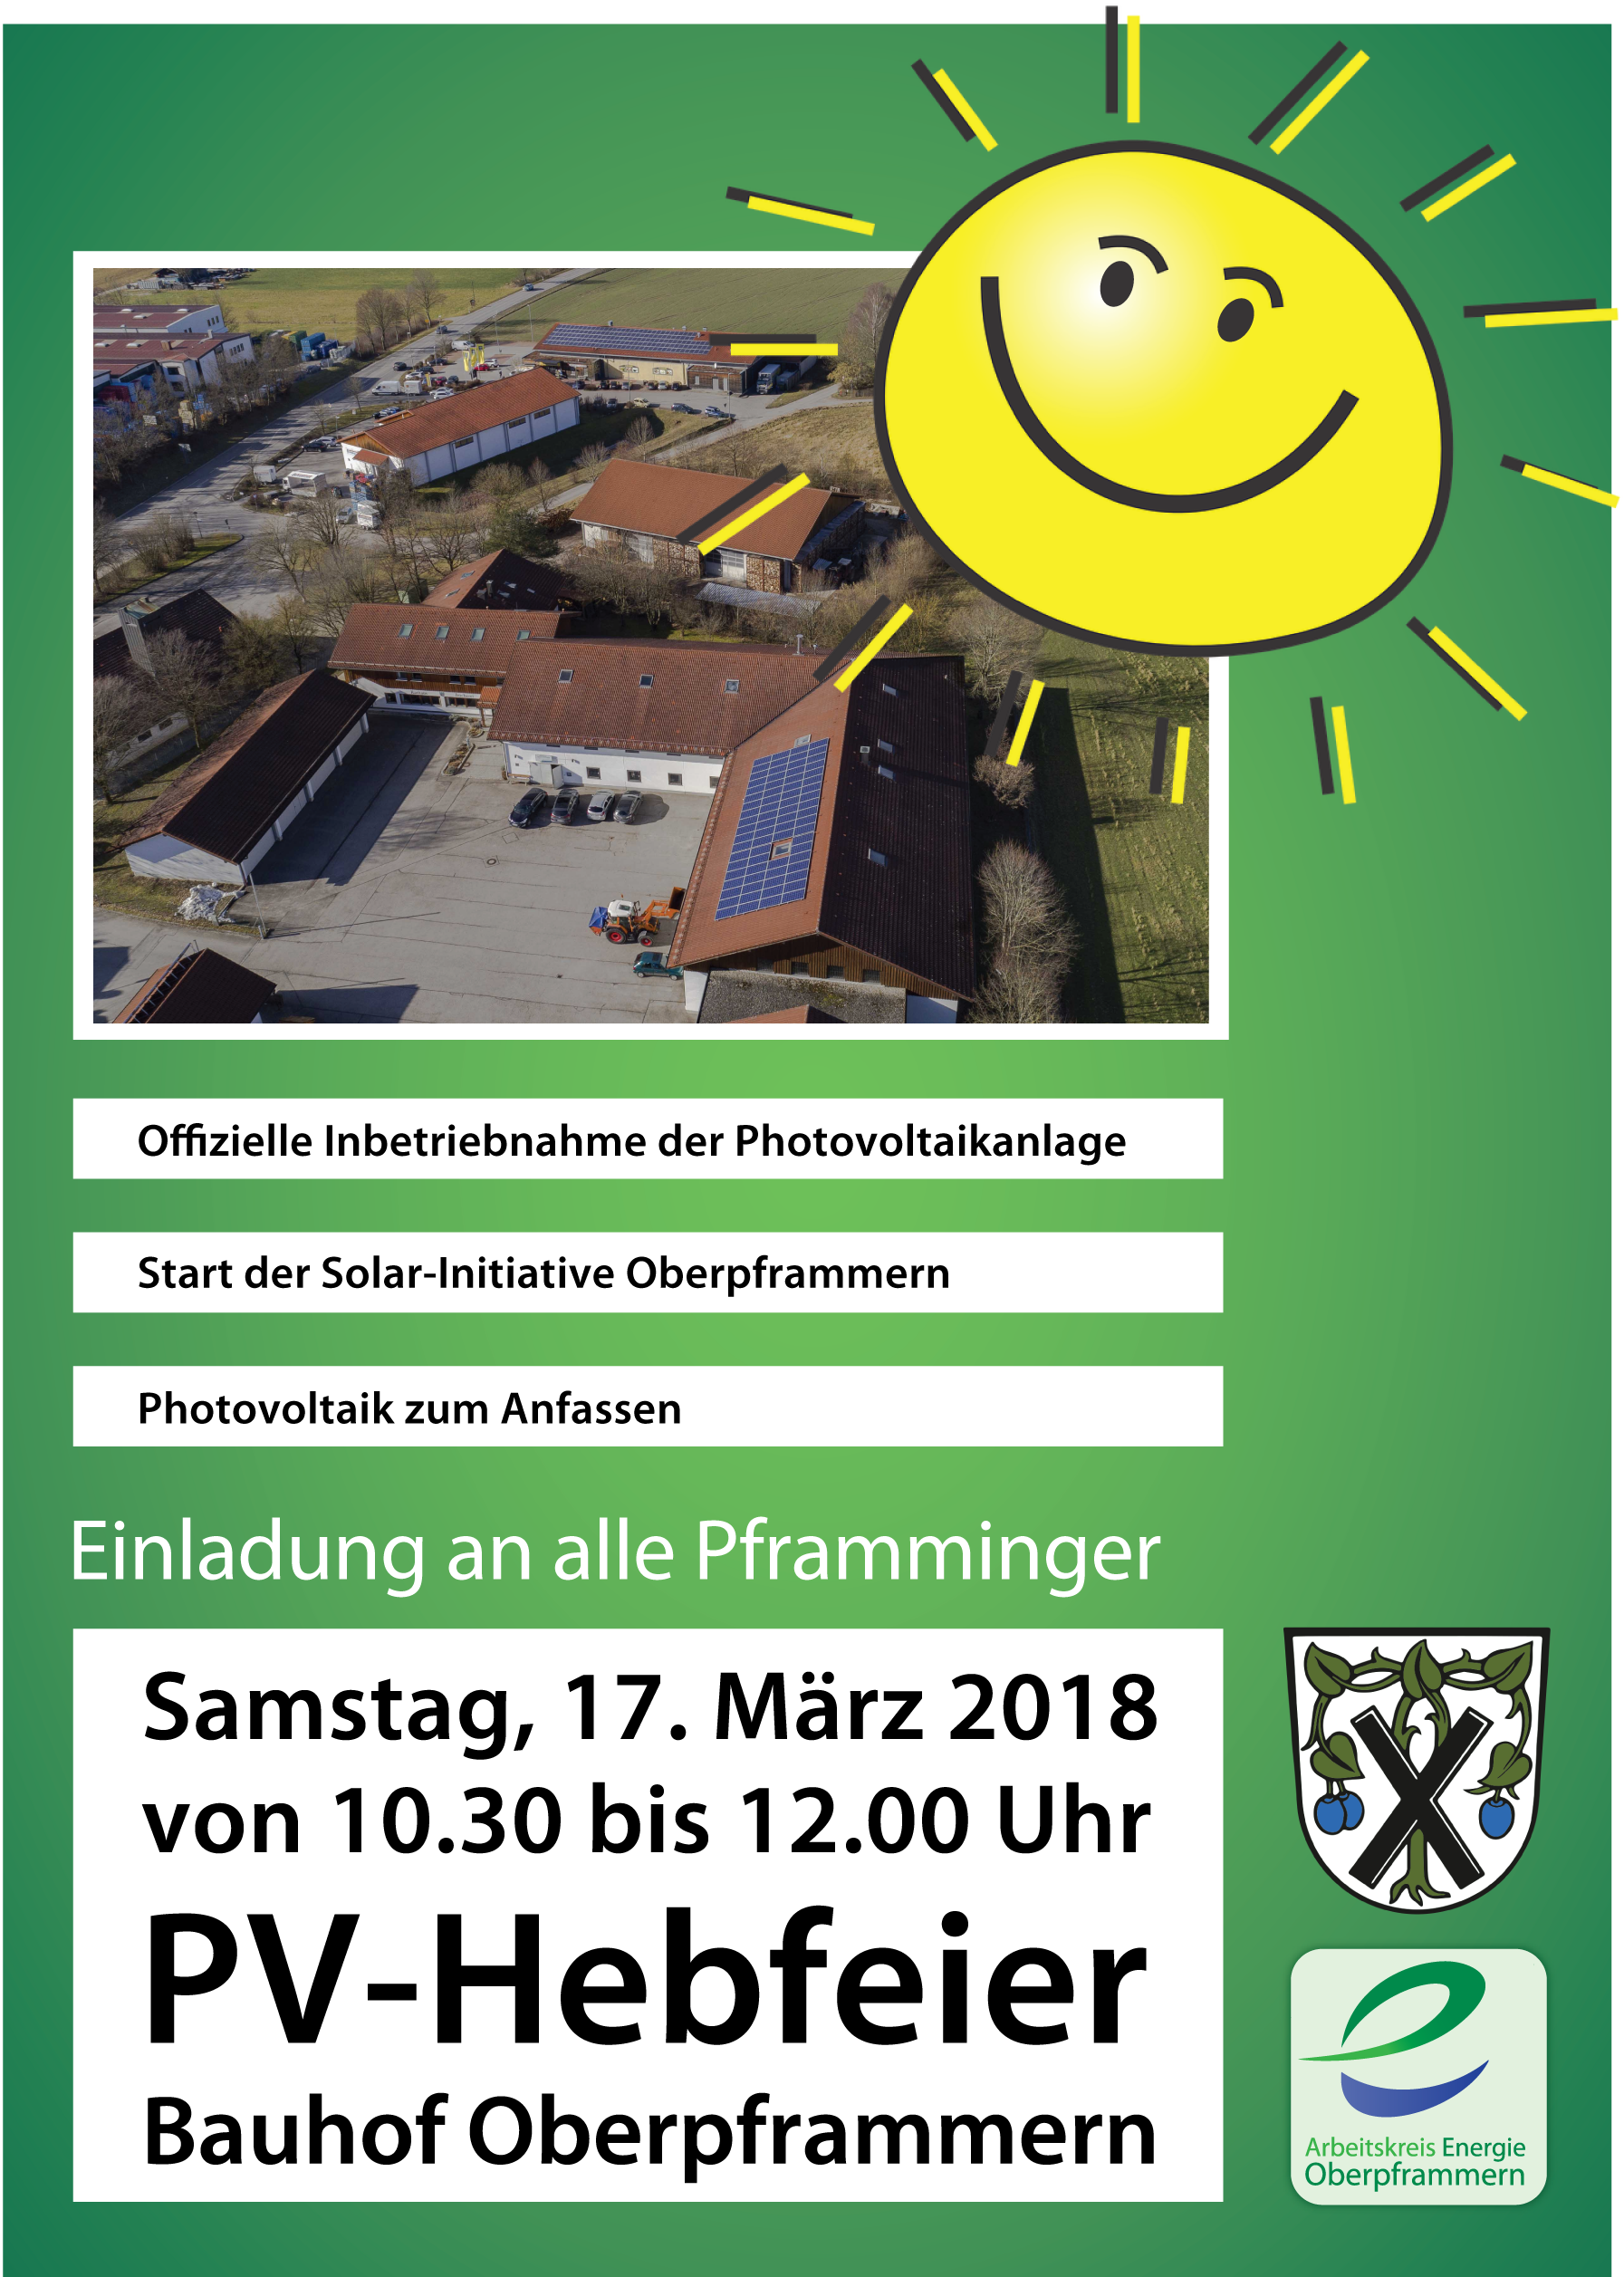 2018 03 17 Plakat PV Bauhof Hebfeier